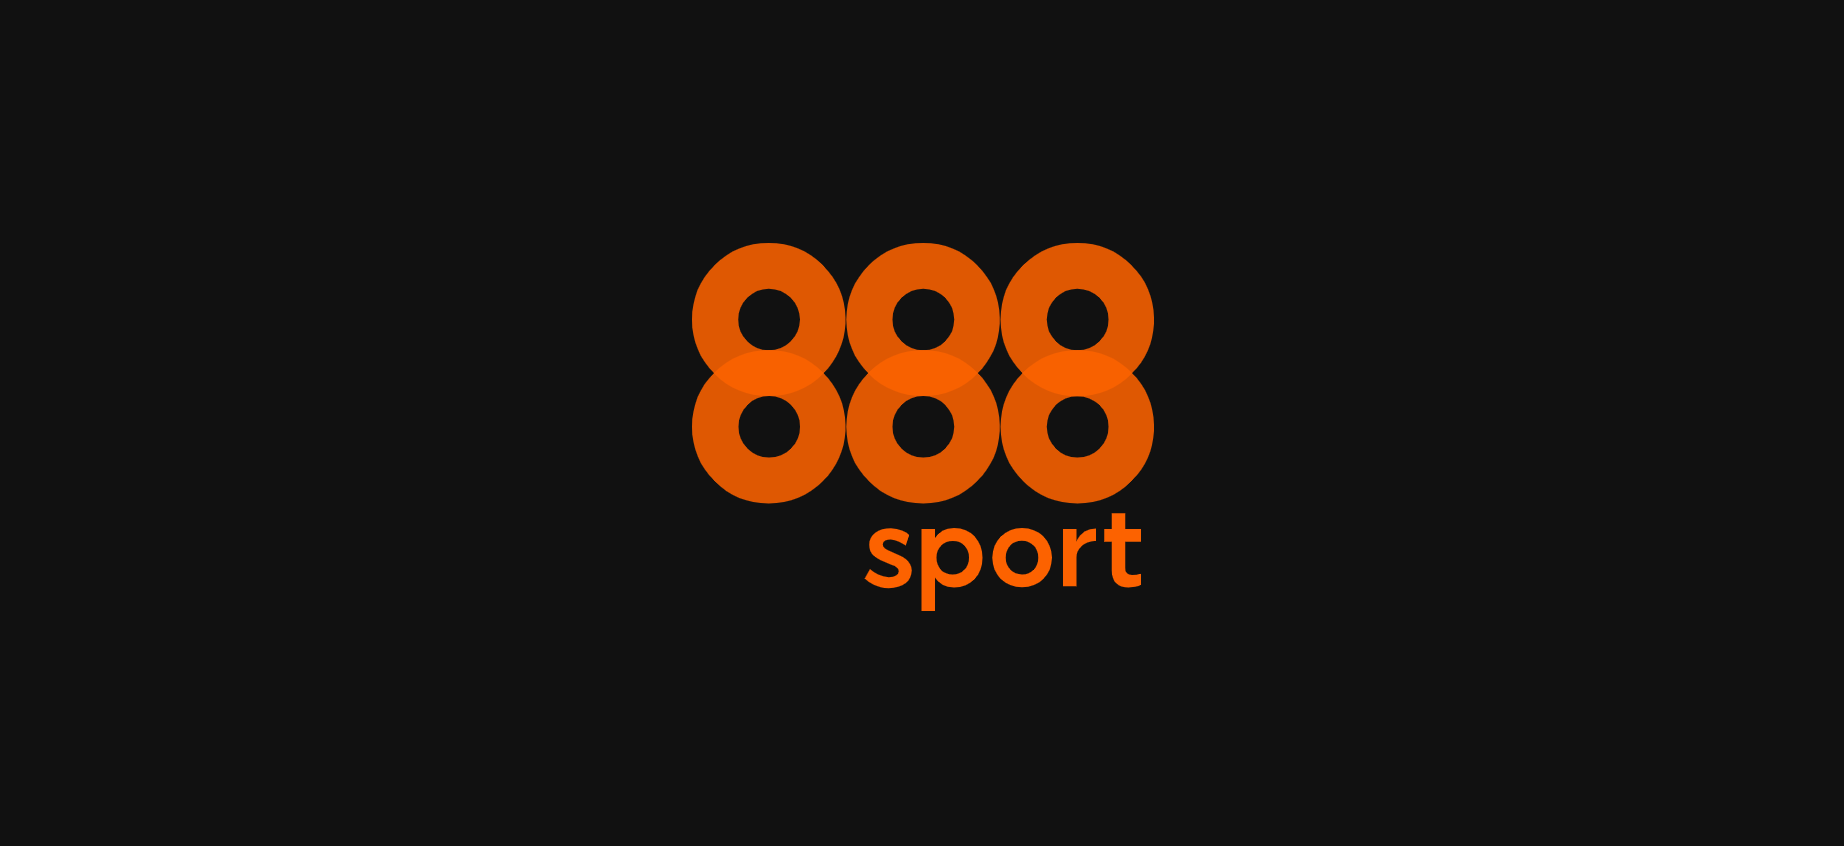 888sport, apostasdesportivas.tv